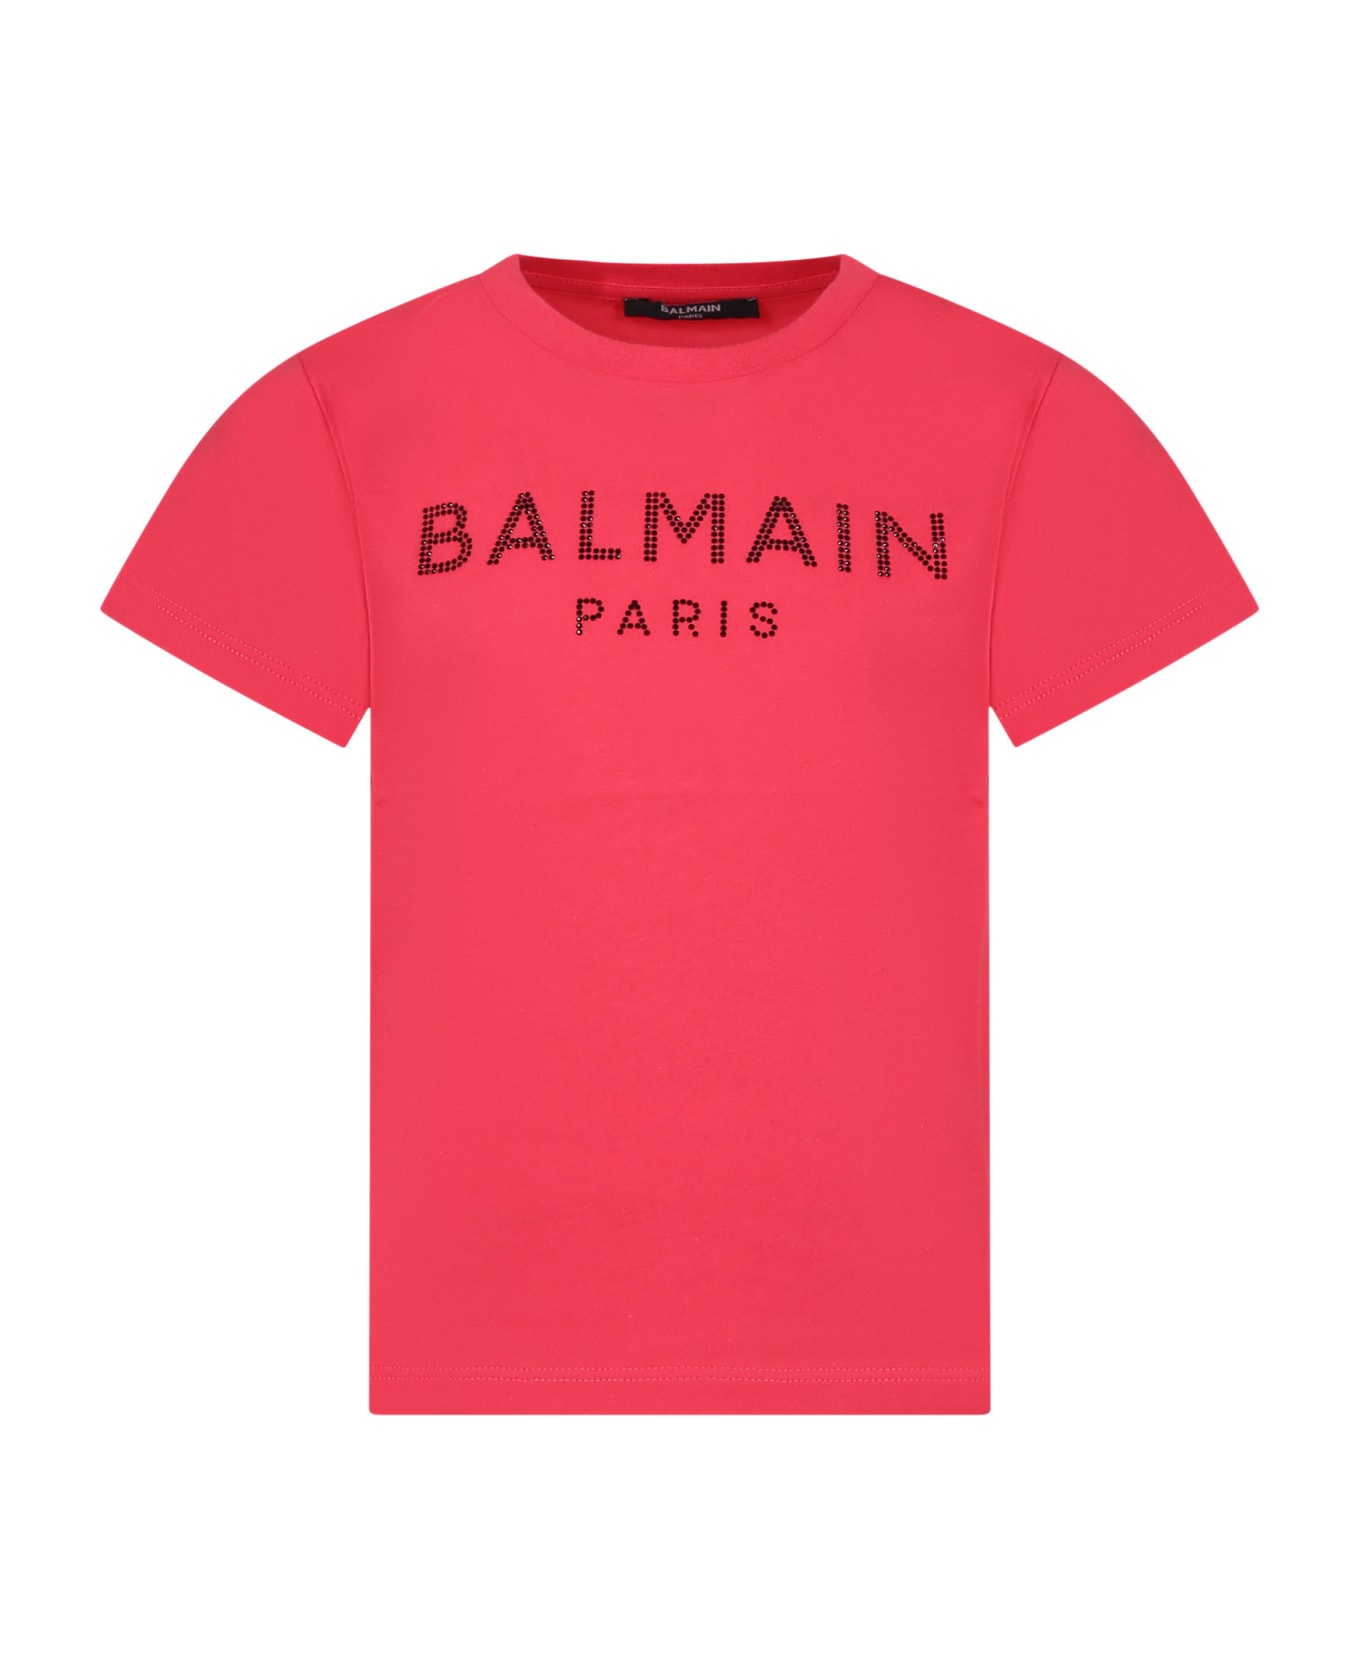 Balmain Fuchsia T-shirt For Girl With Logo And Rhinestones - Fuchsia